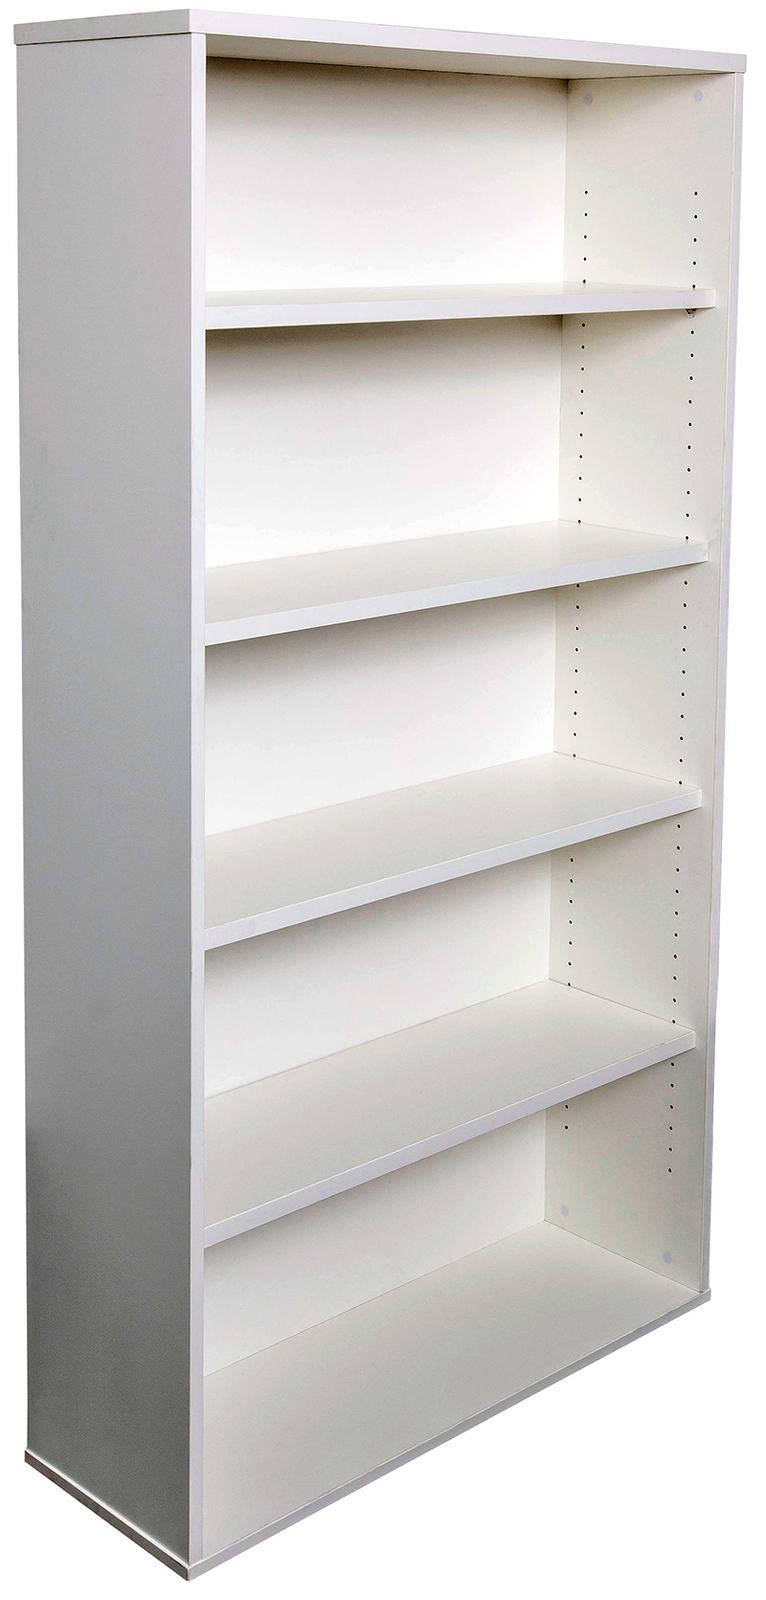 Express Tall White Bookcase Storage, Tall White Book Shelves